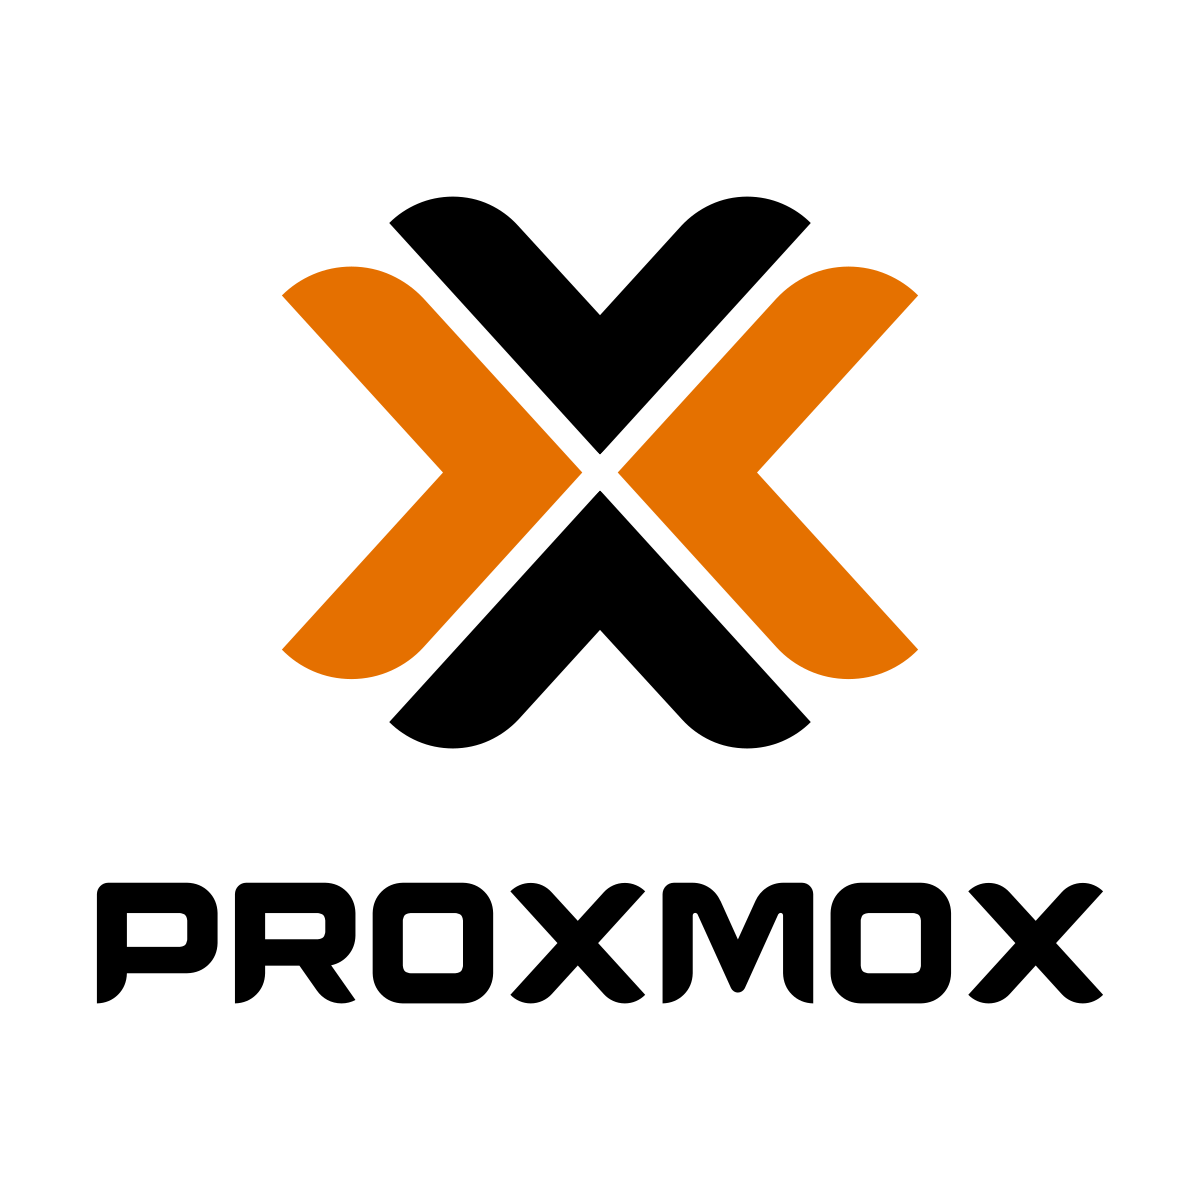 www.proxmox.com